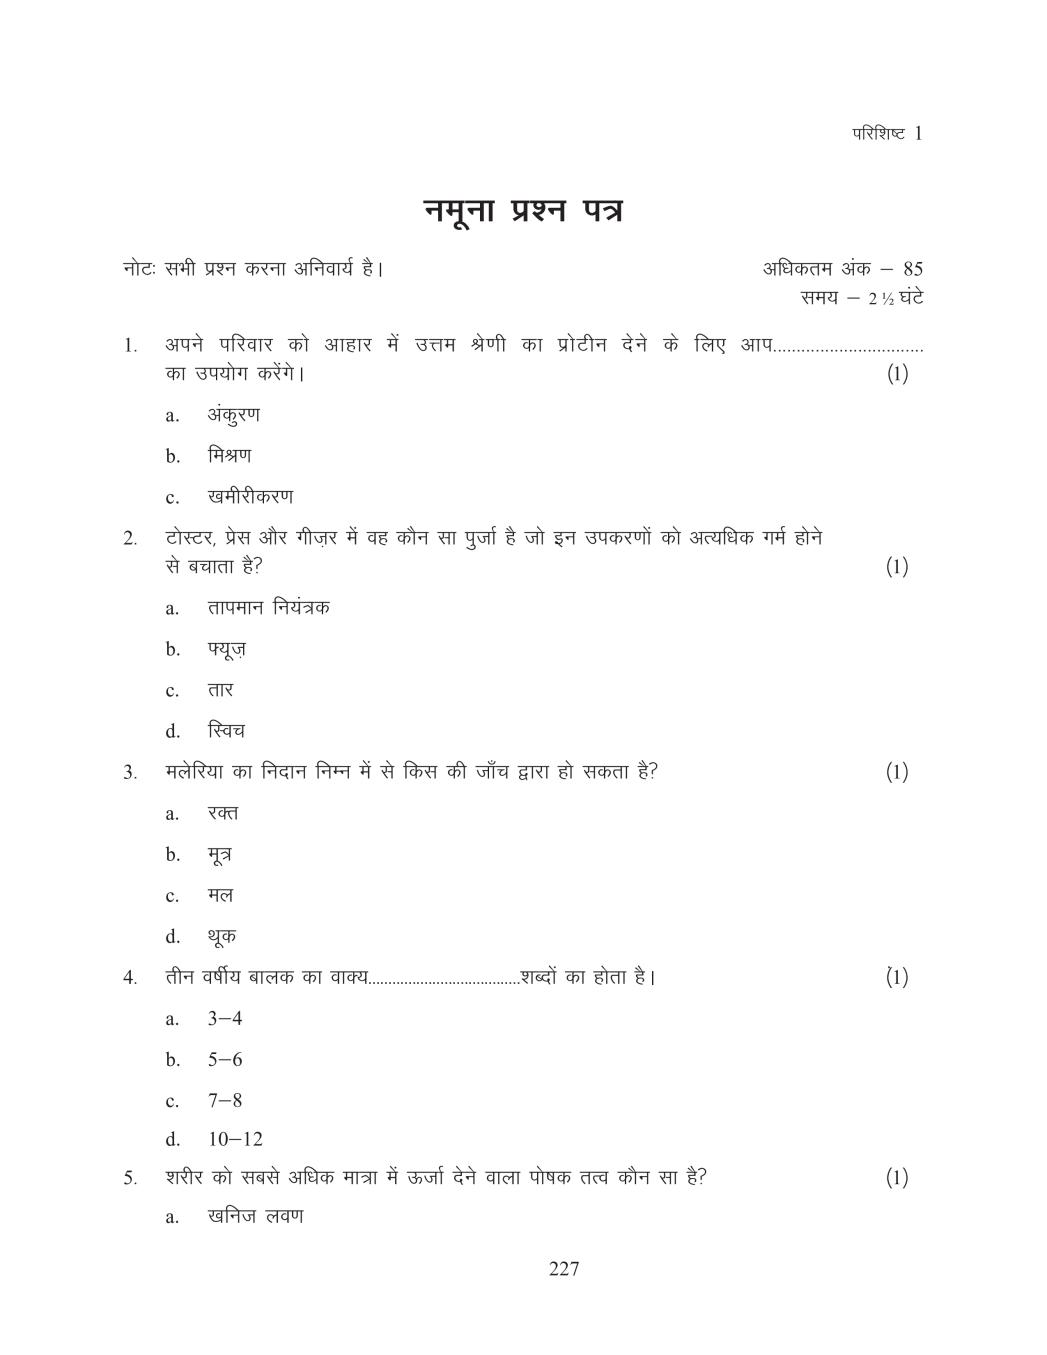 NIOS Class 10 Sample Paper 2020 - Home Science (Hindi Medium) - Page 1